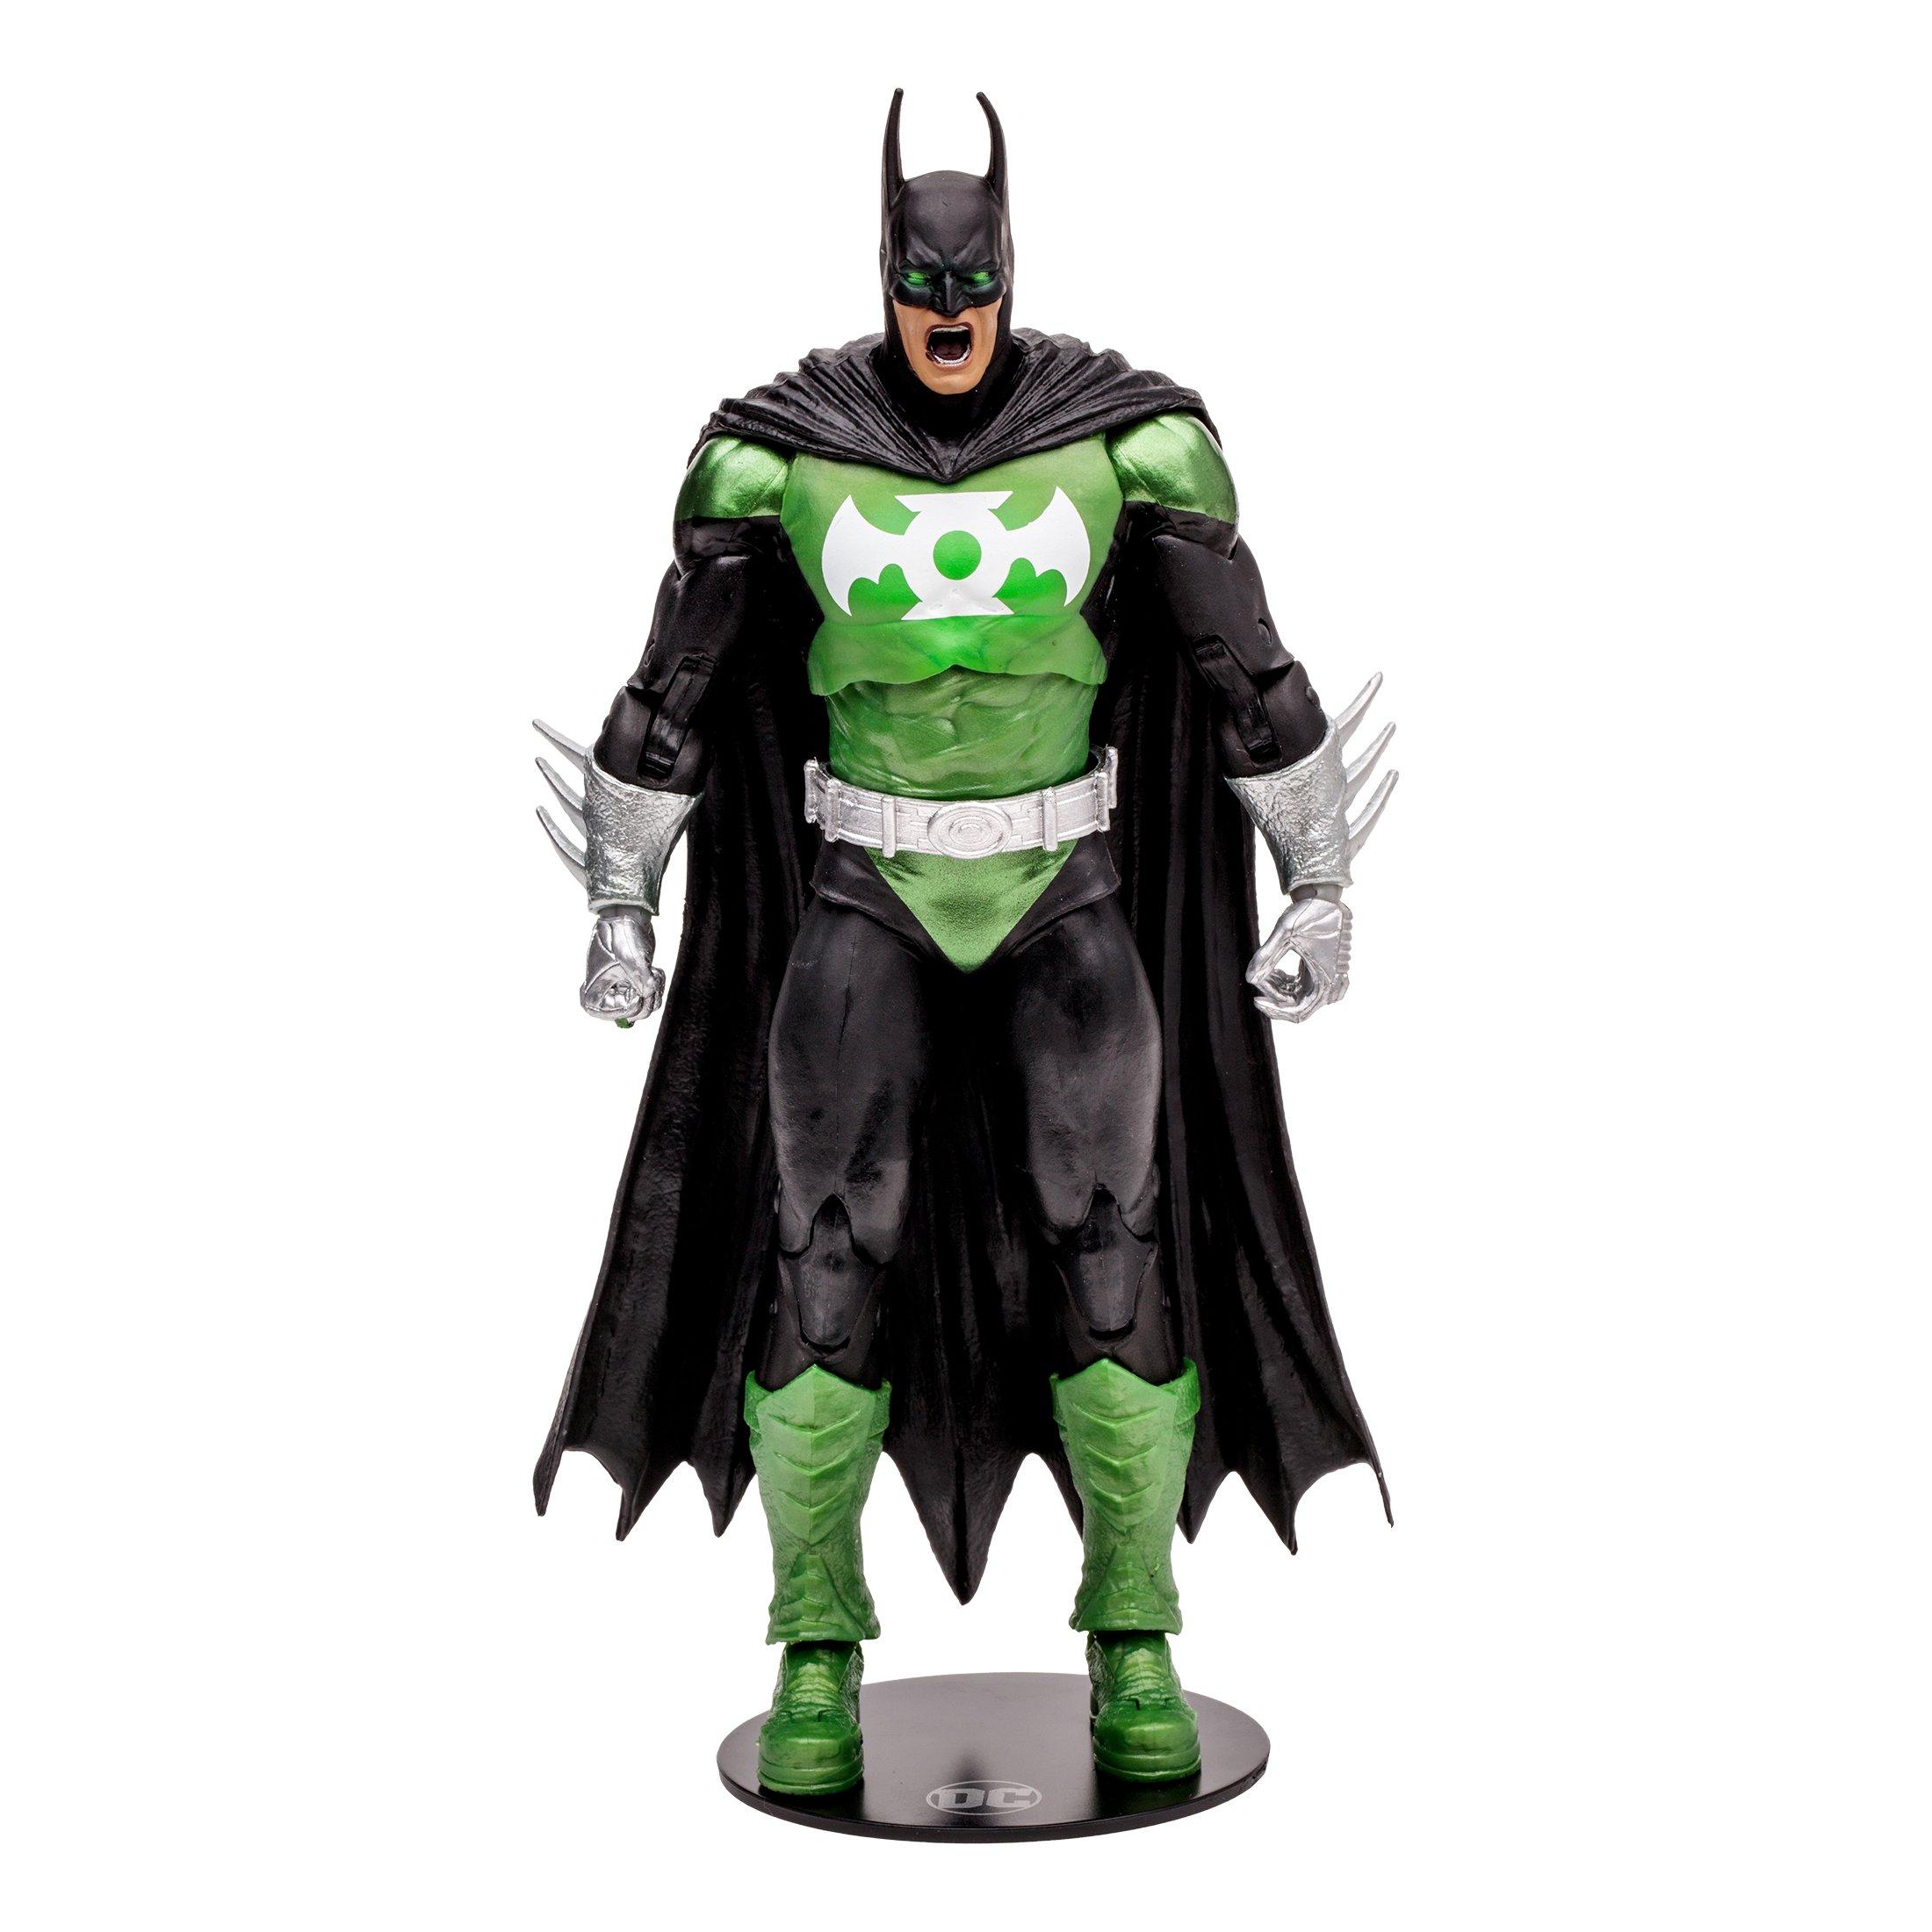 McFarlane Toys Collector Edition DC Multiverse Batman as Green Lantern 7-in Action Figure